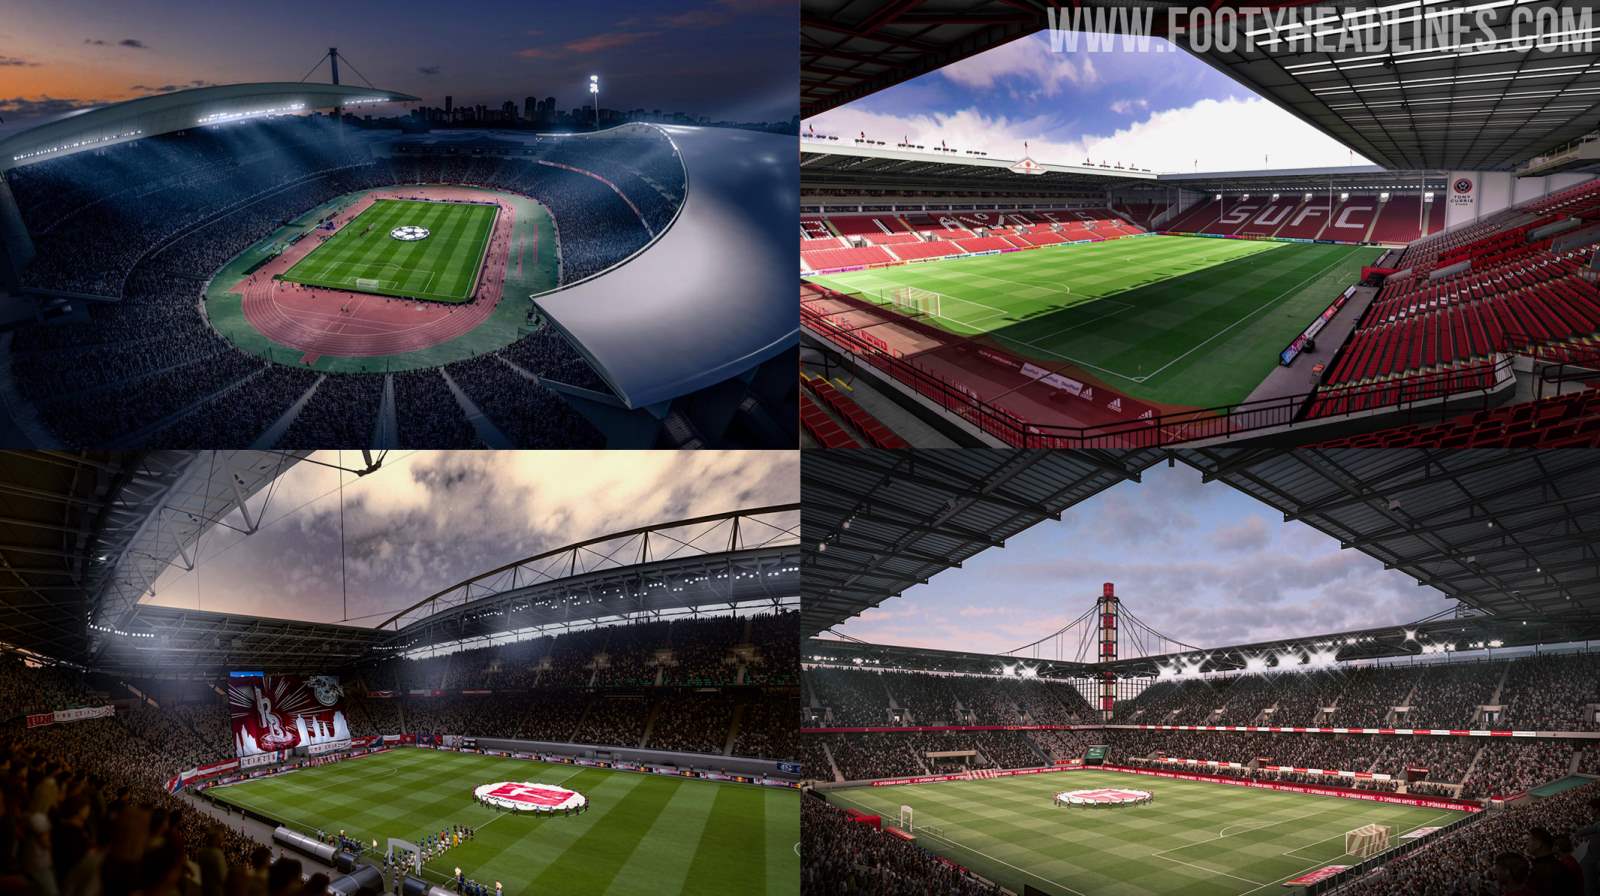 FIFA 20 Stadiums Revealed - No Camp Nou, Allianz & Juventus Stadium - Footy Headlines